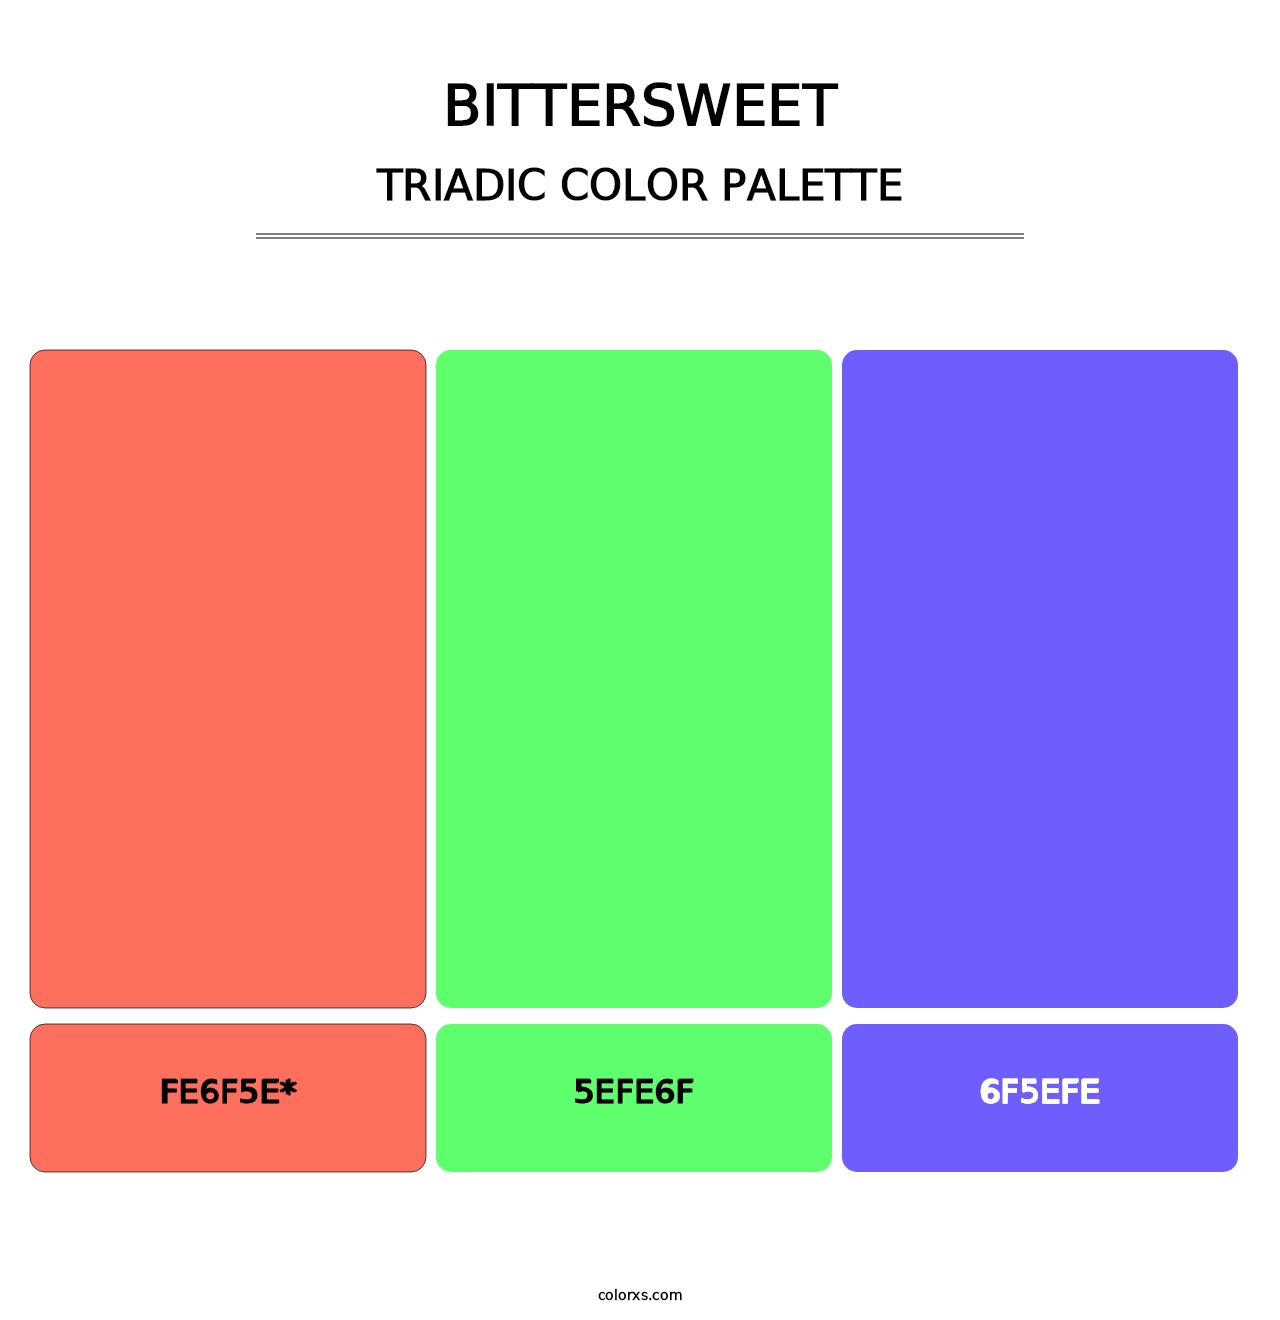 Bittersweet - Triadic Color Palette